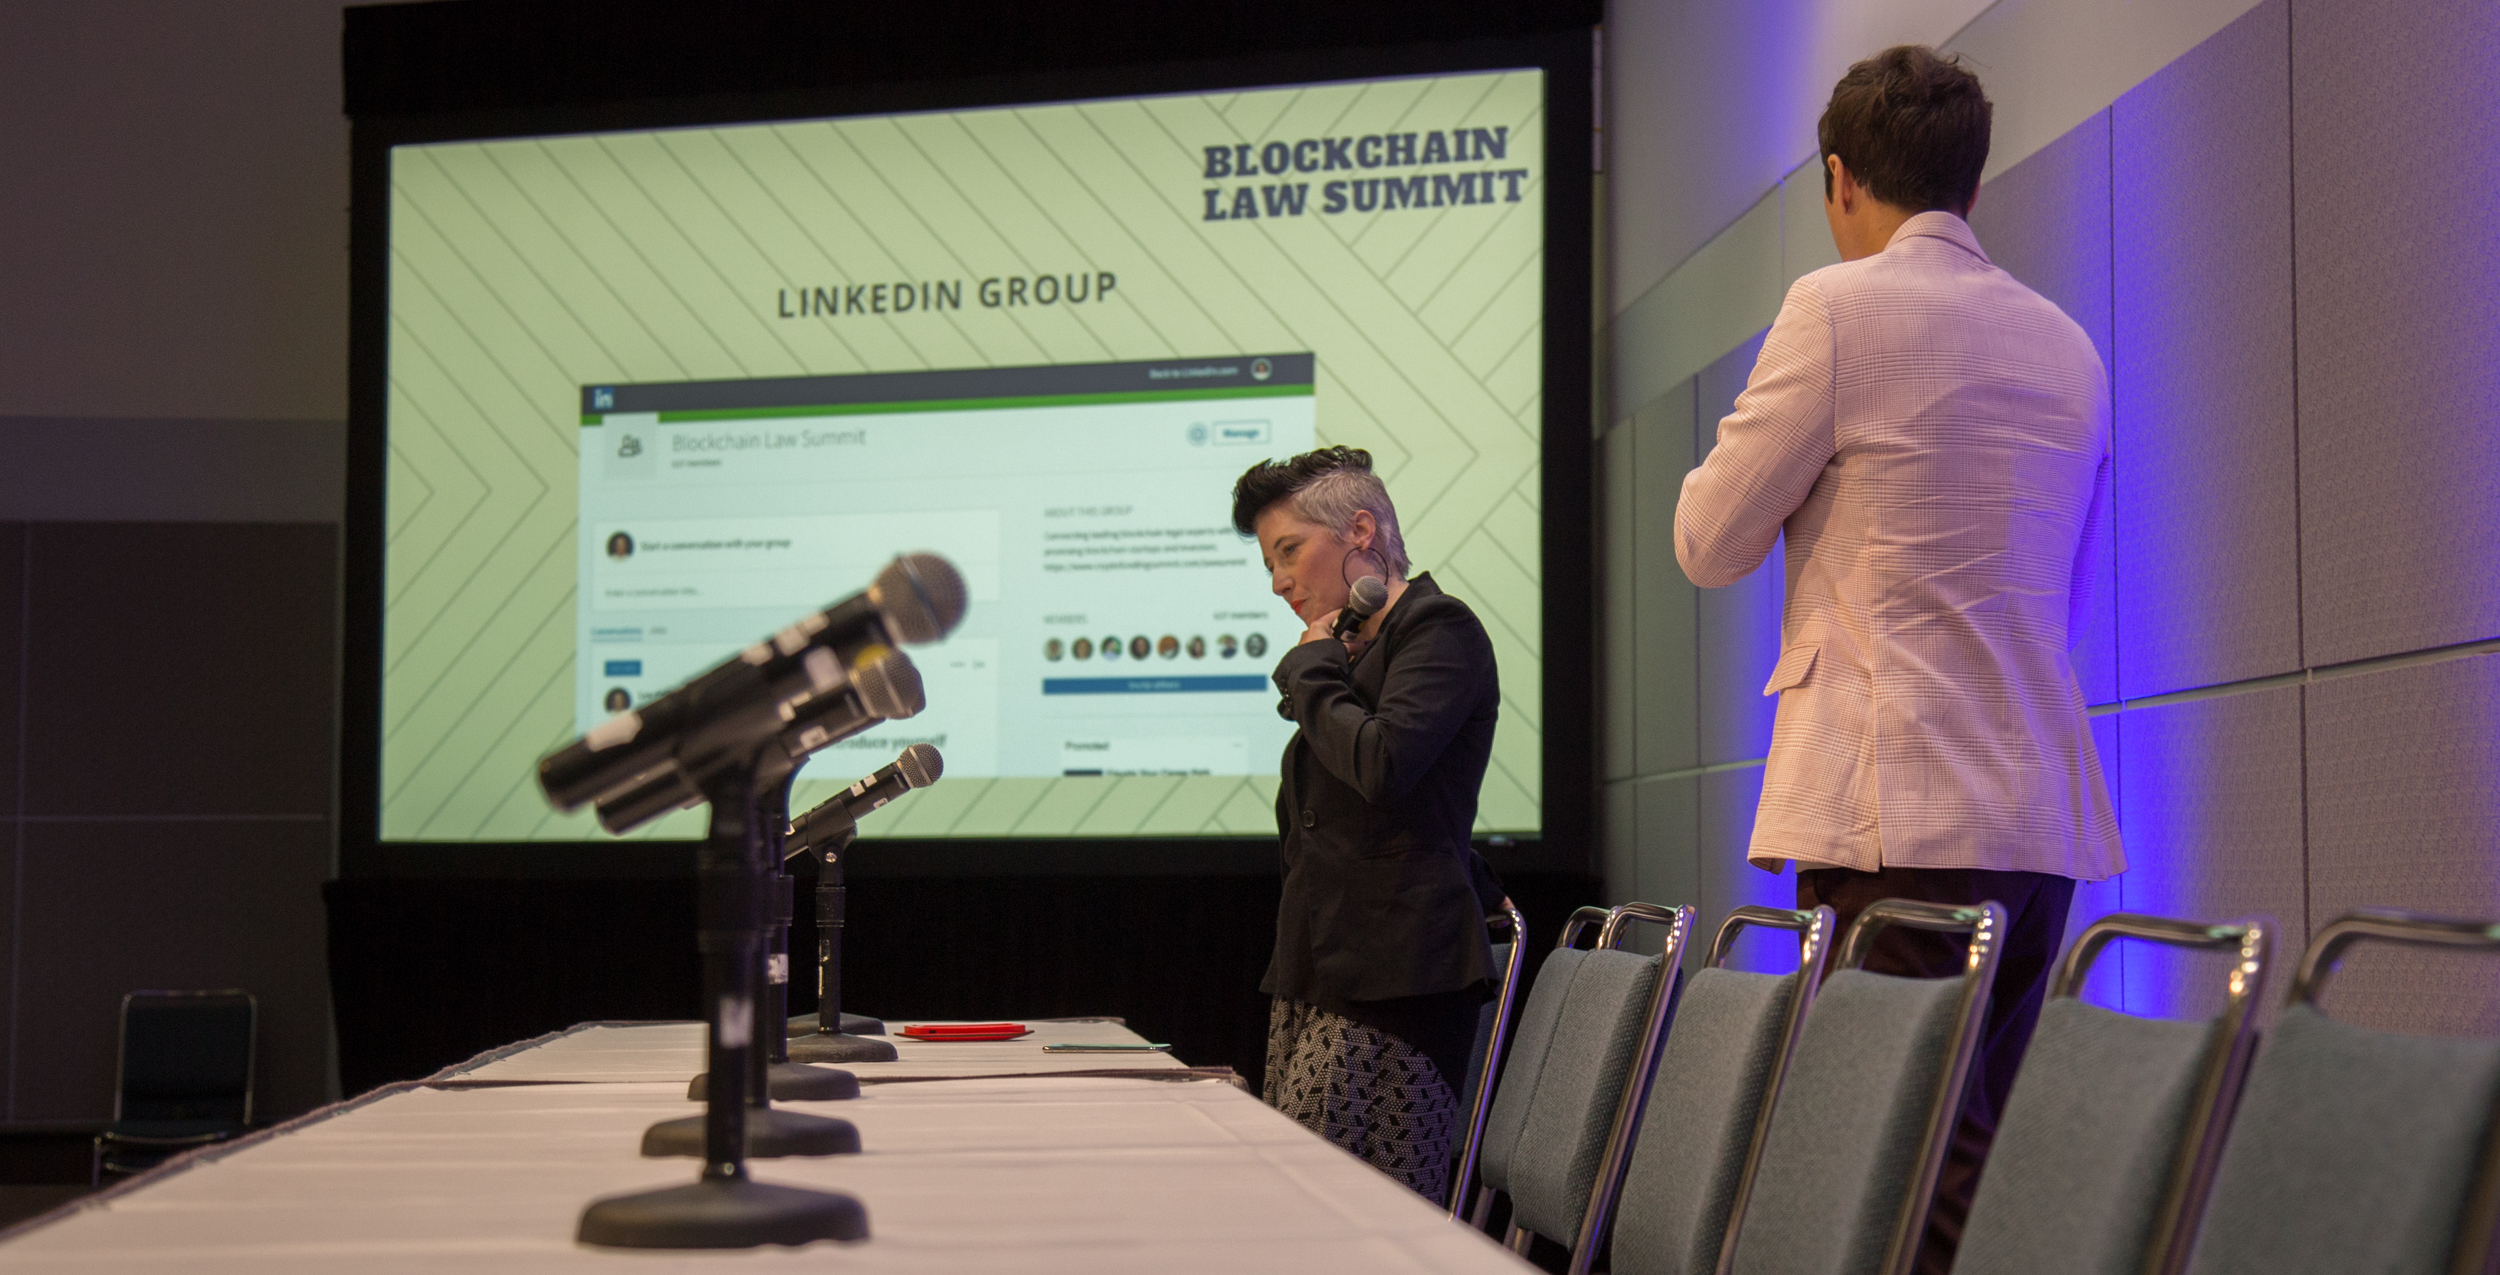 Leo Kangin, Host @ Blockchain Law Summit - LA Convention Center